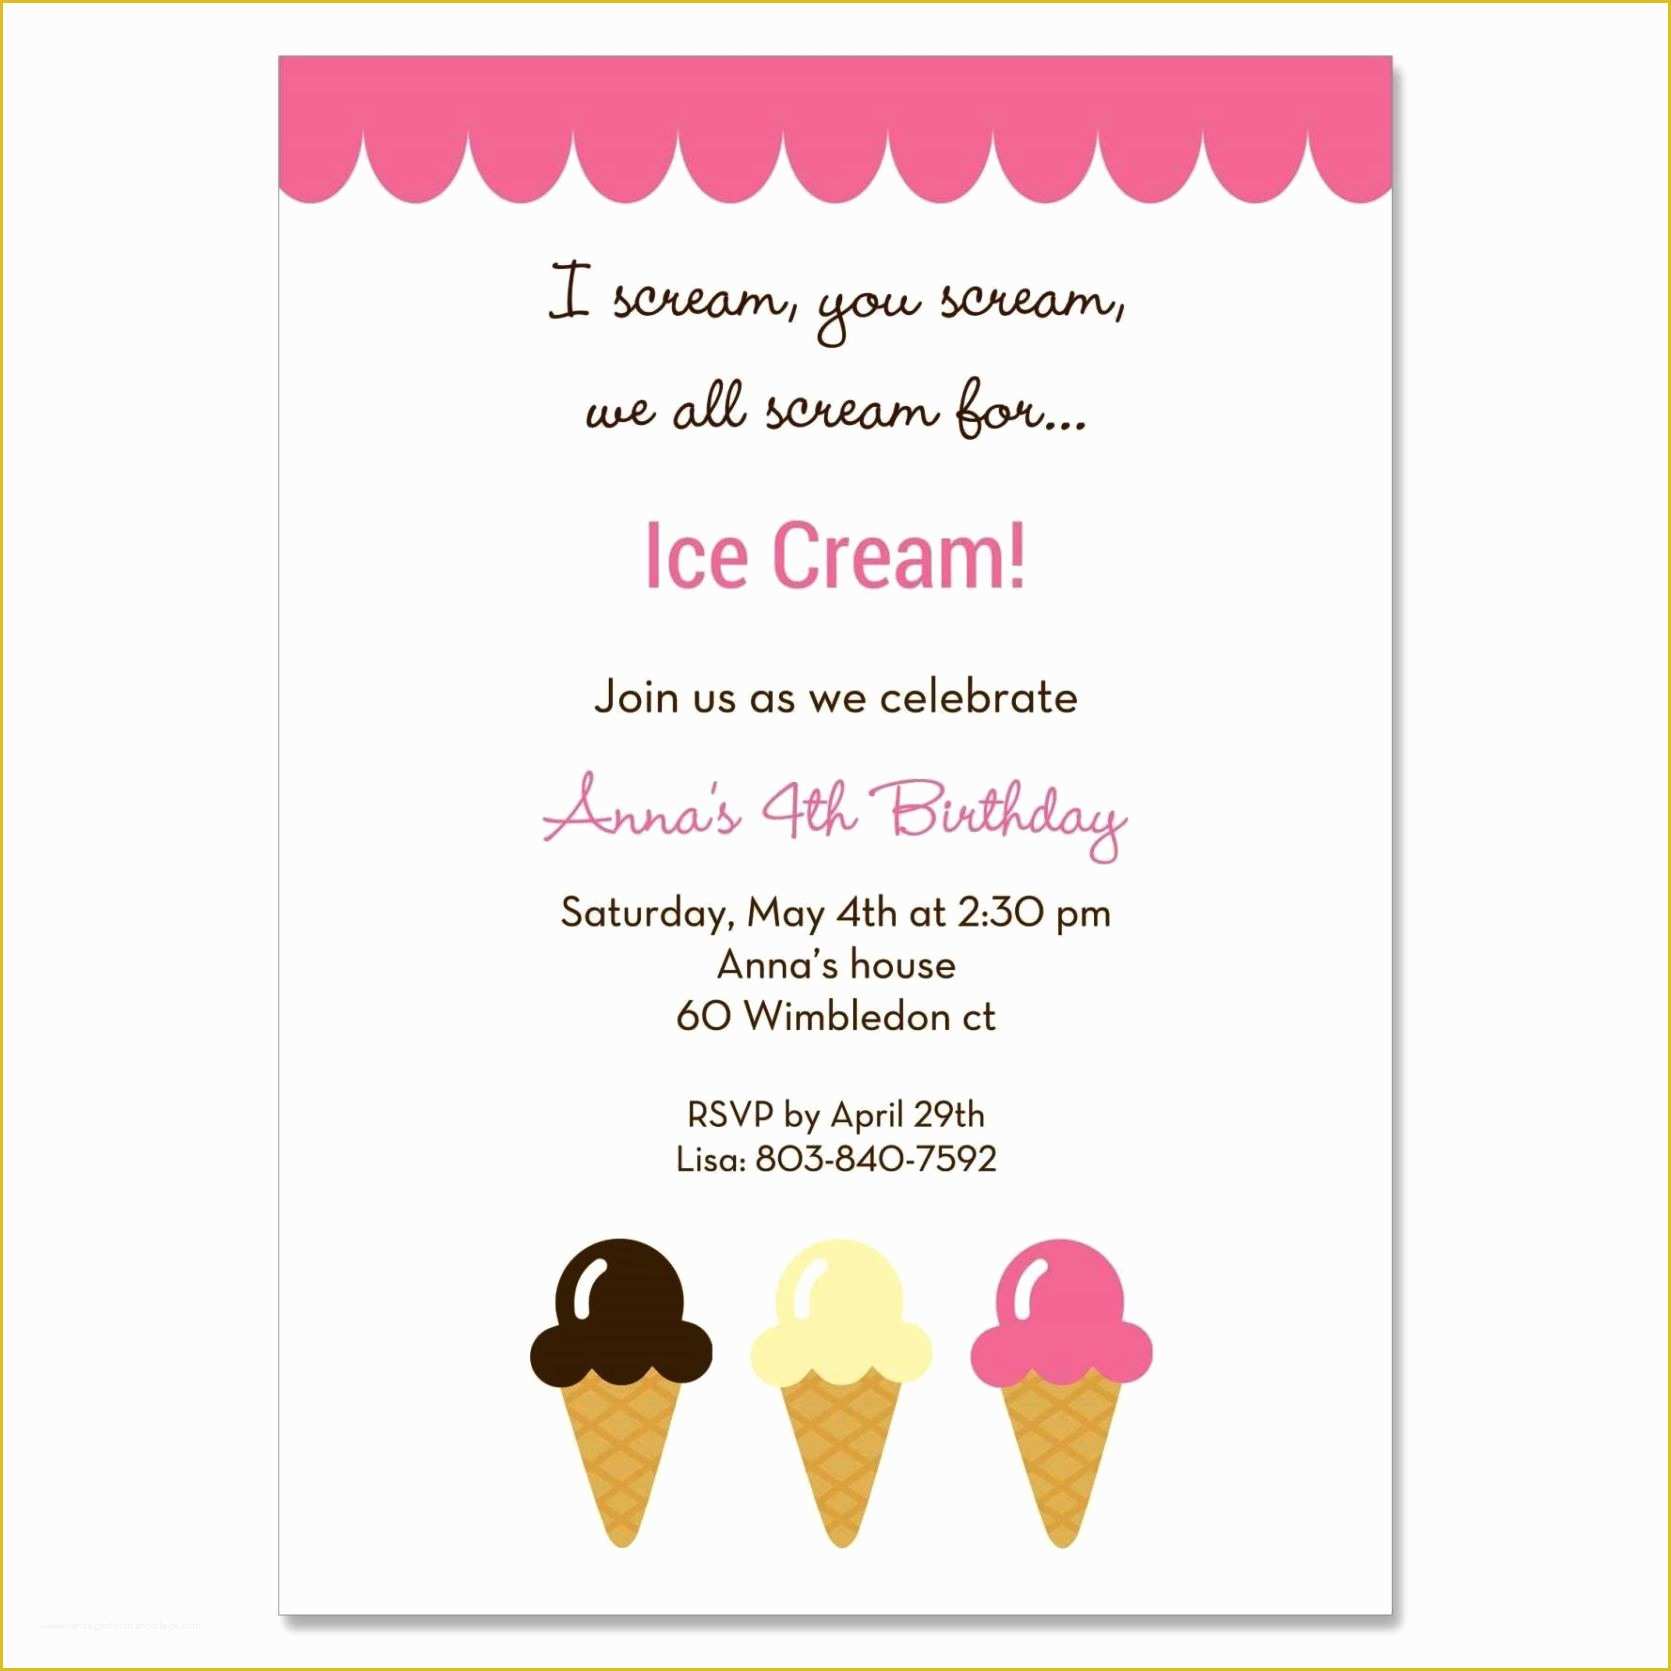 Ice Cream social Invitation Template Free Of Ice Cream social Invitation Template Sampletemplatess